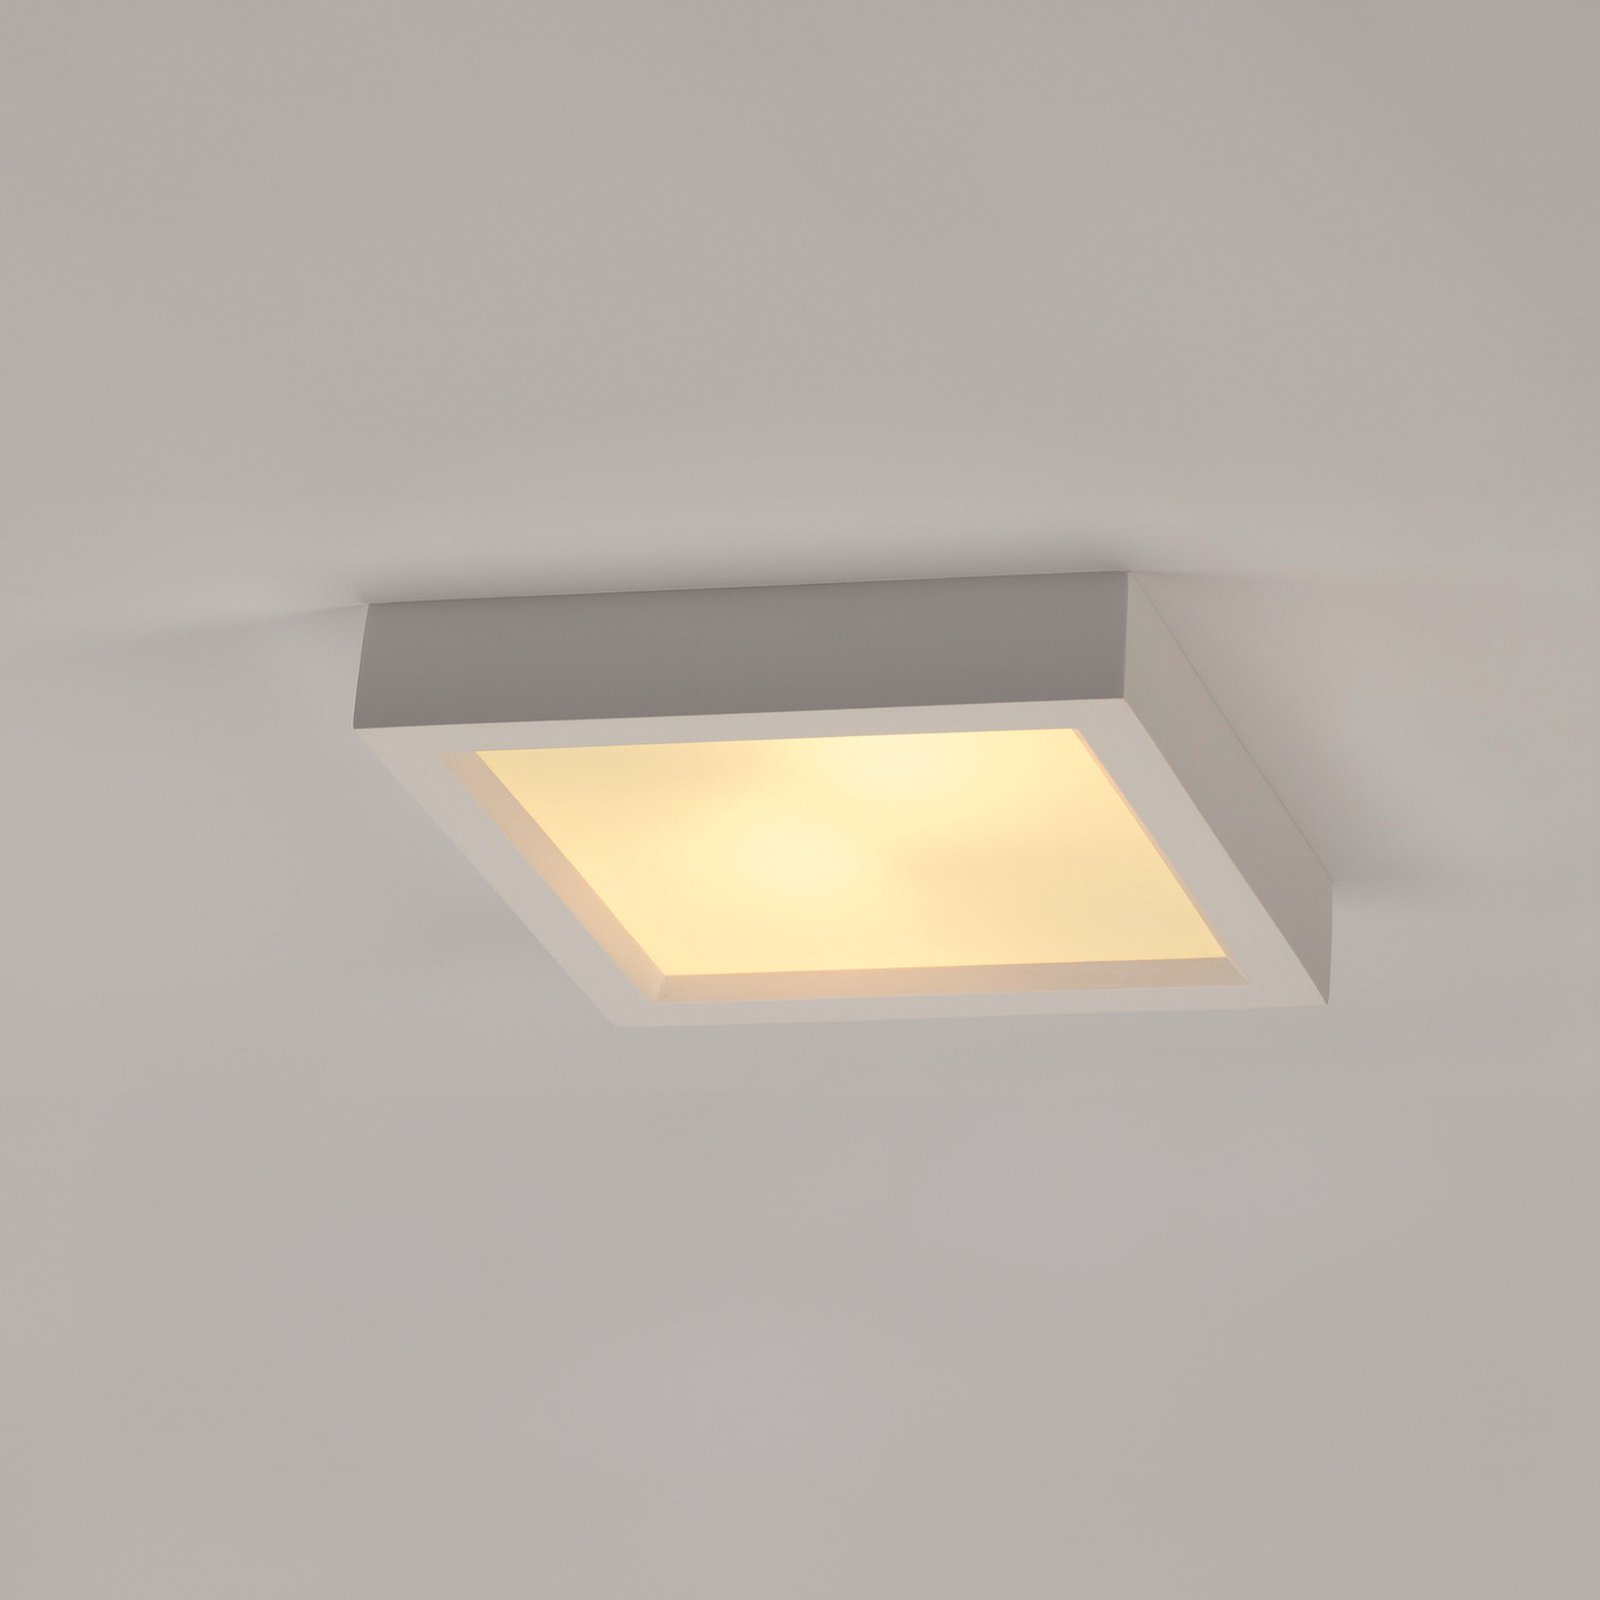 Plafondlamp SLV Plastra 104, wit, gips, breedte 25 cm